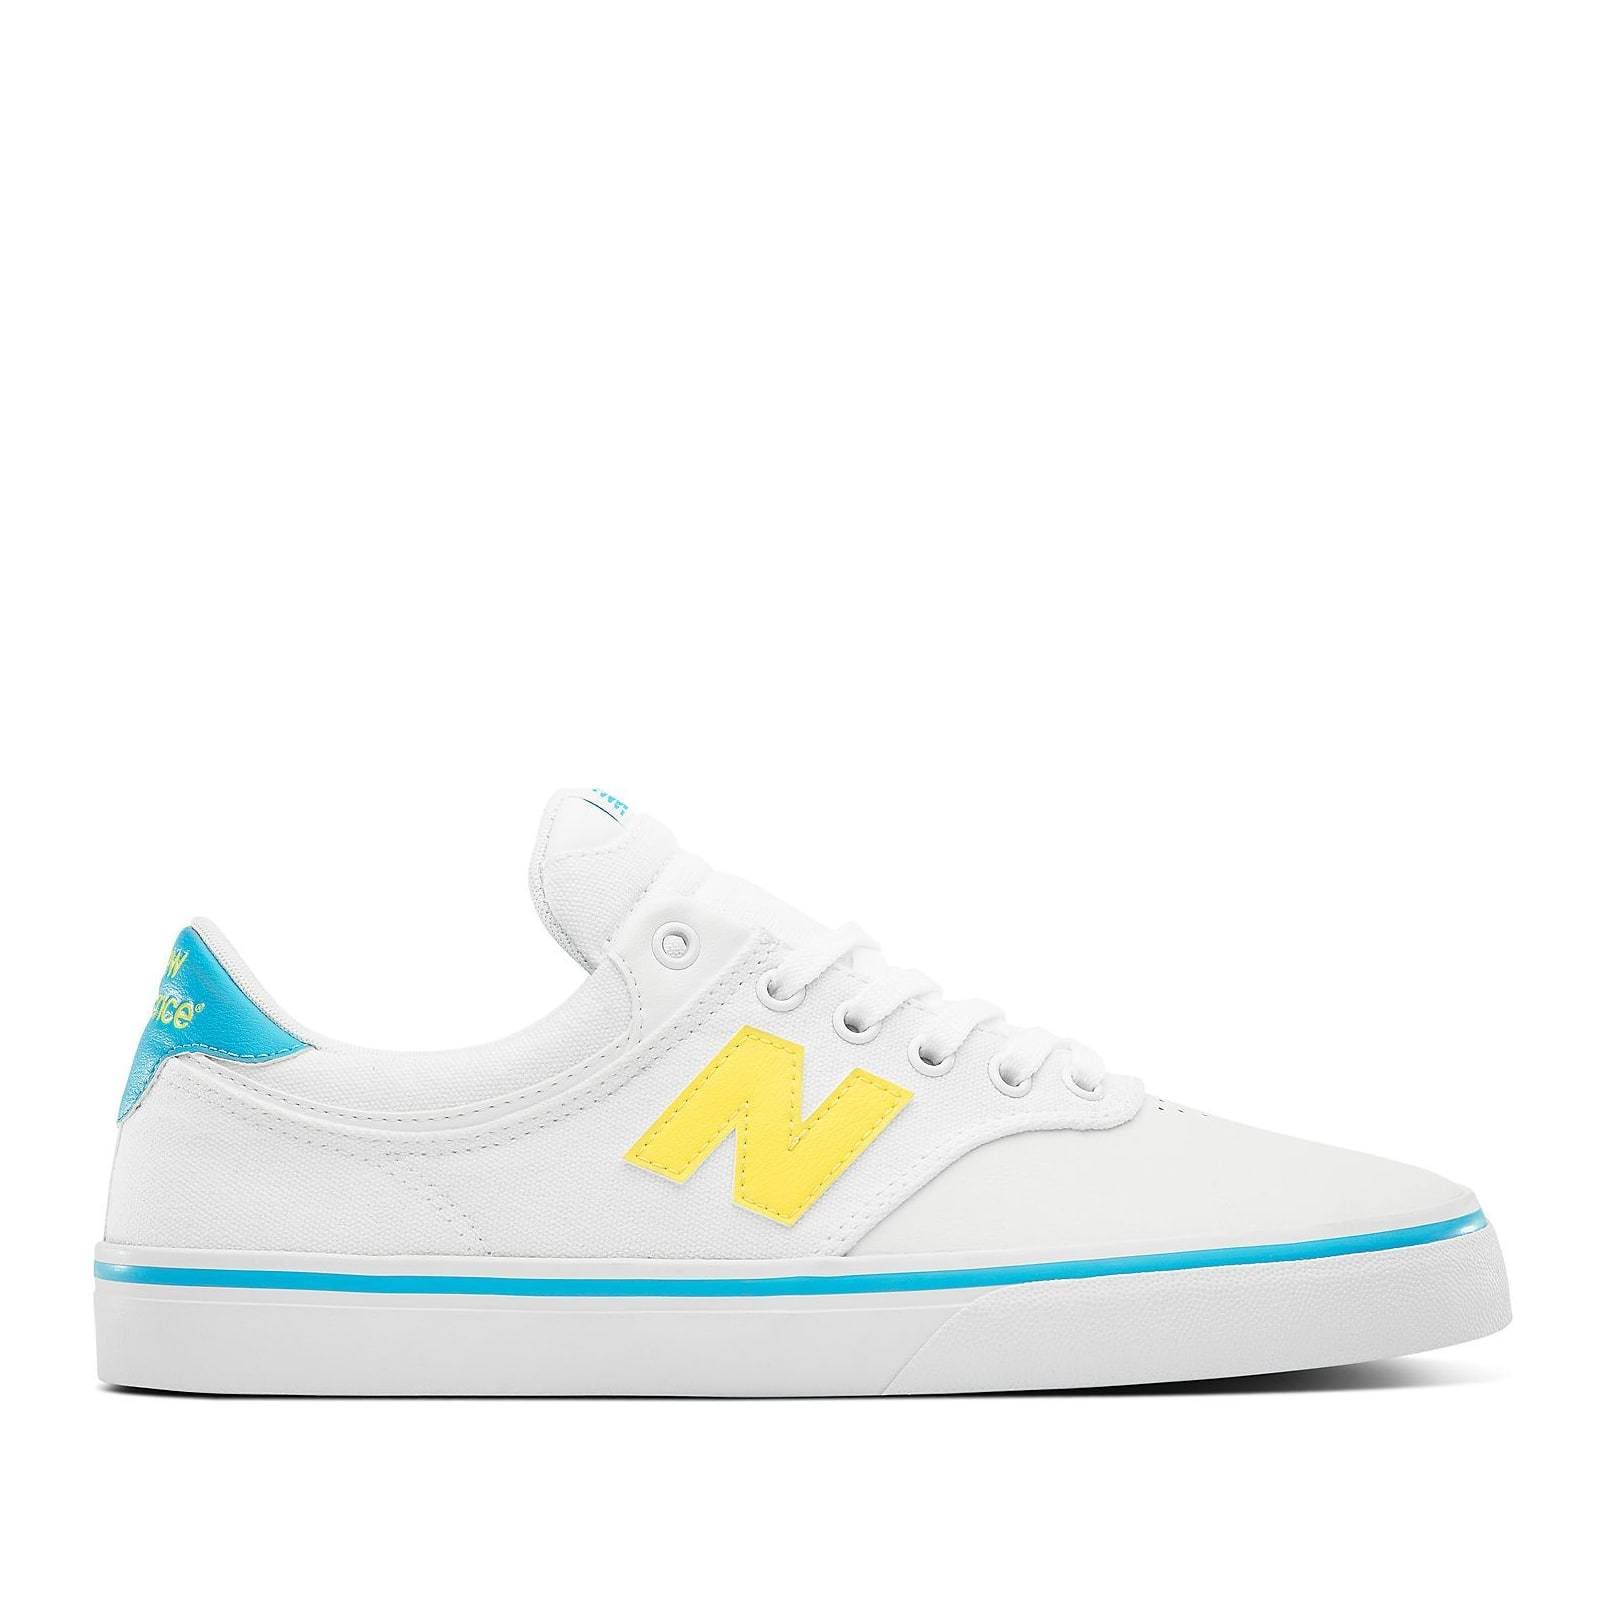 New Balance Numeric 255 Shoes - White / Yellow